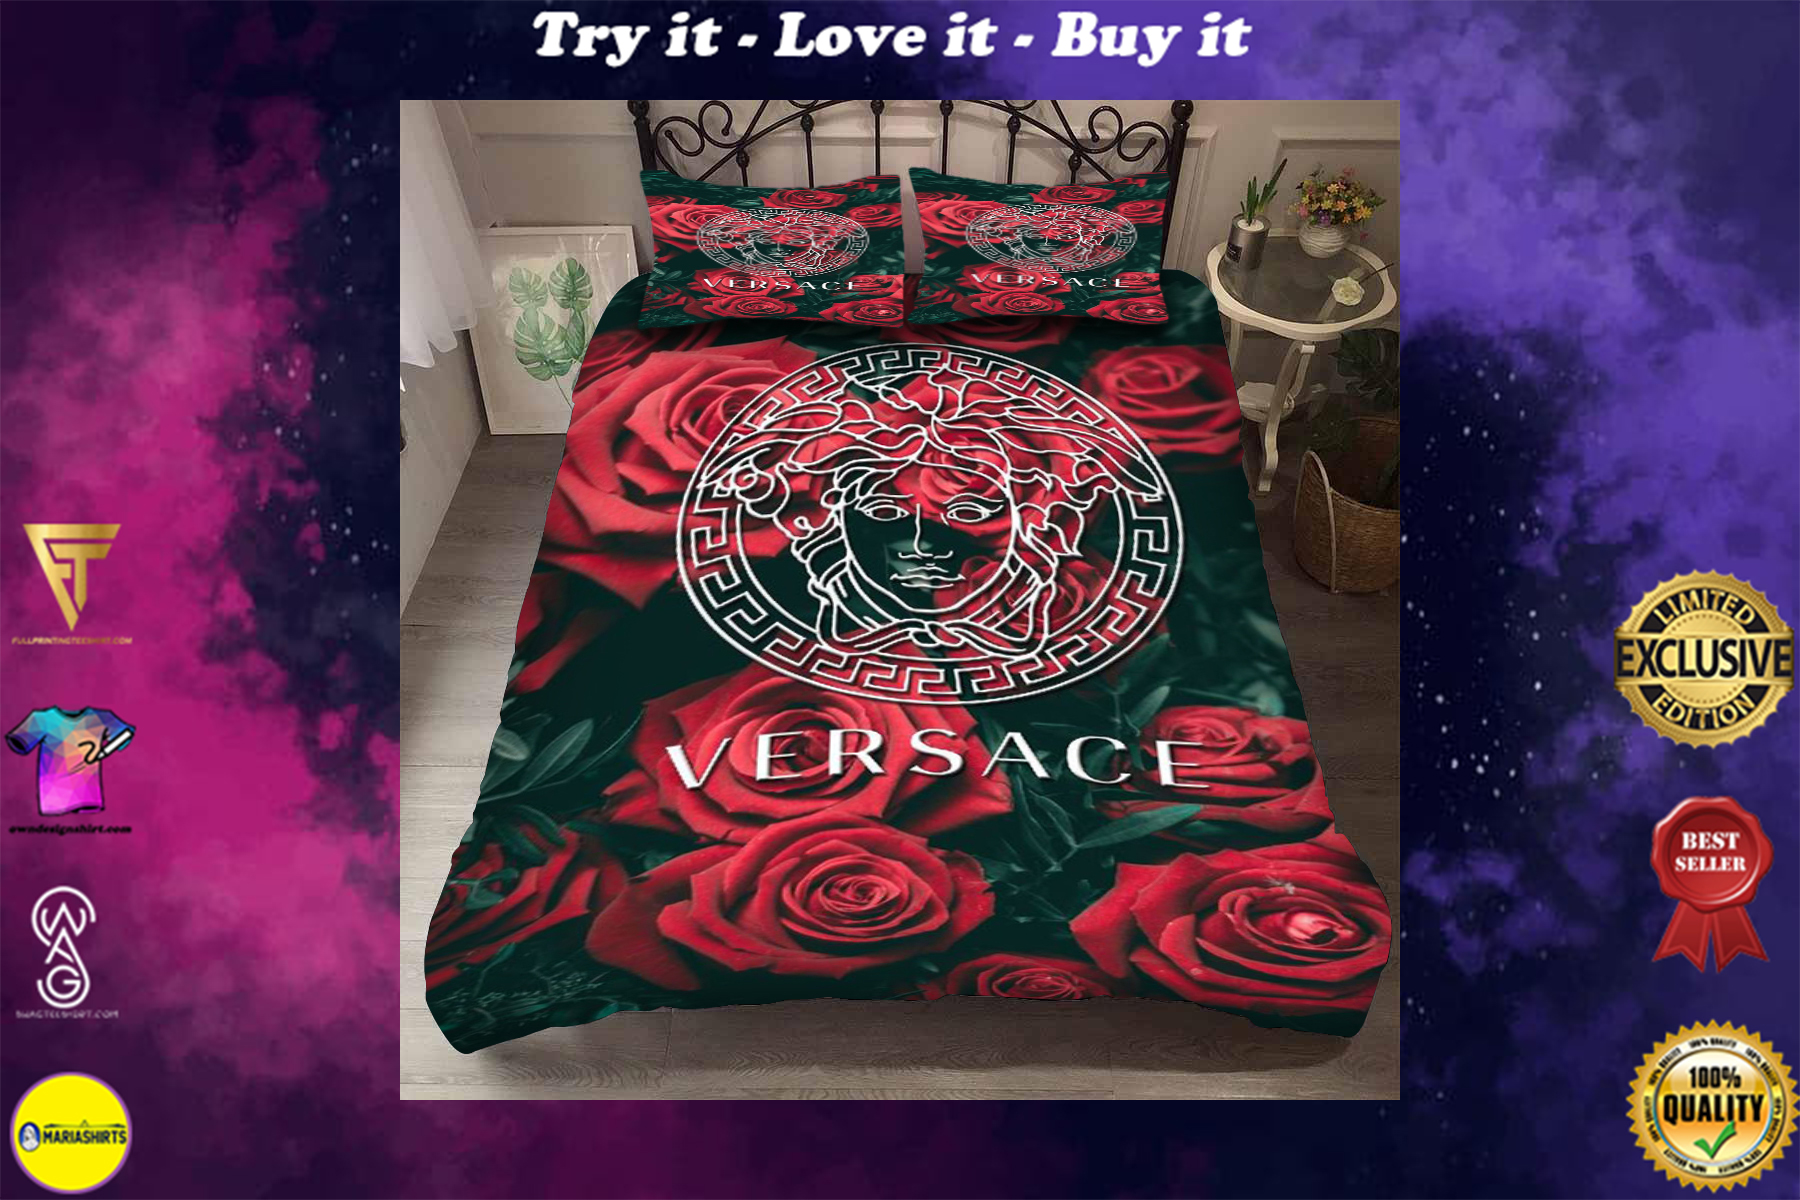 versace symbols and roses bedding set